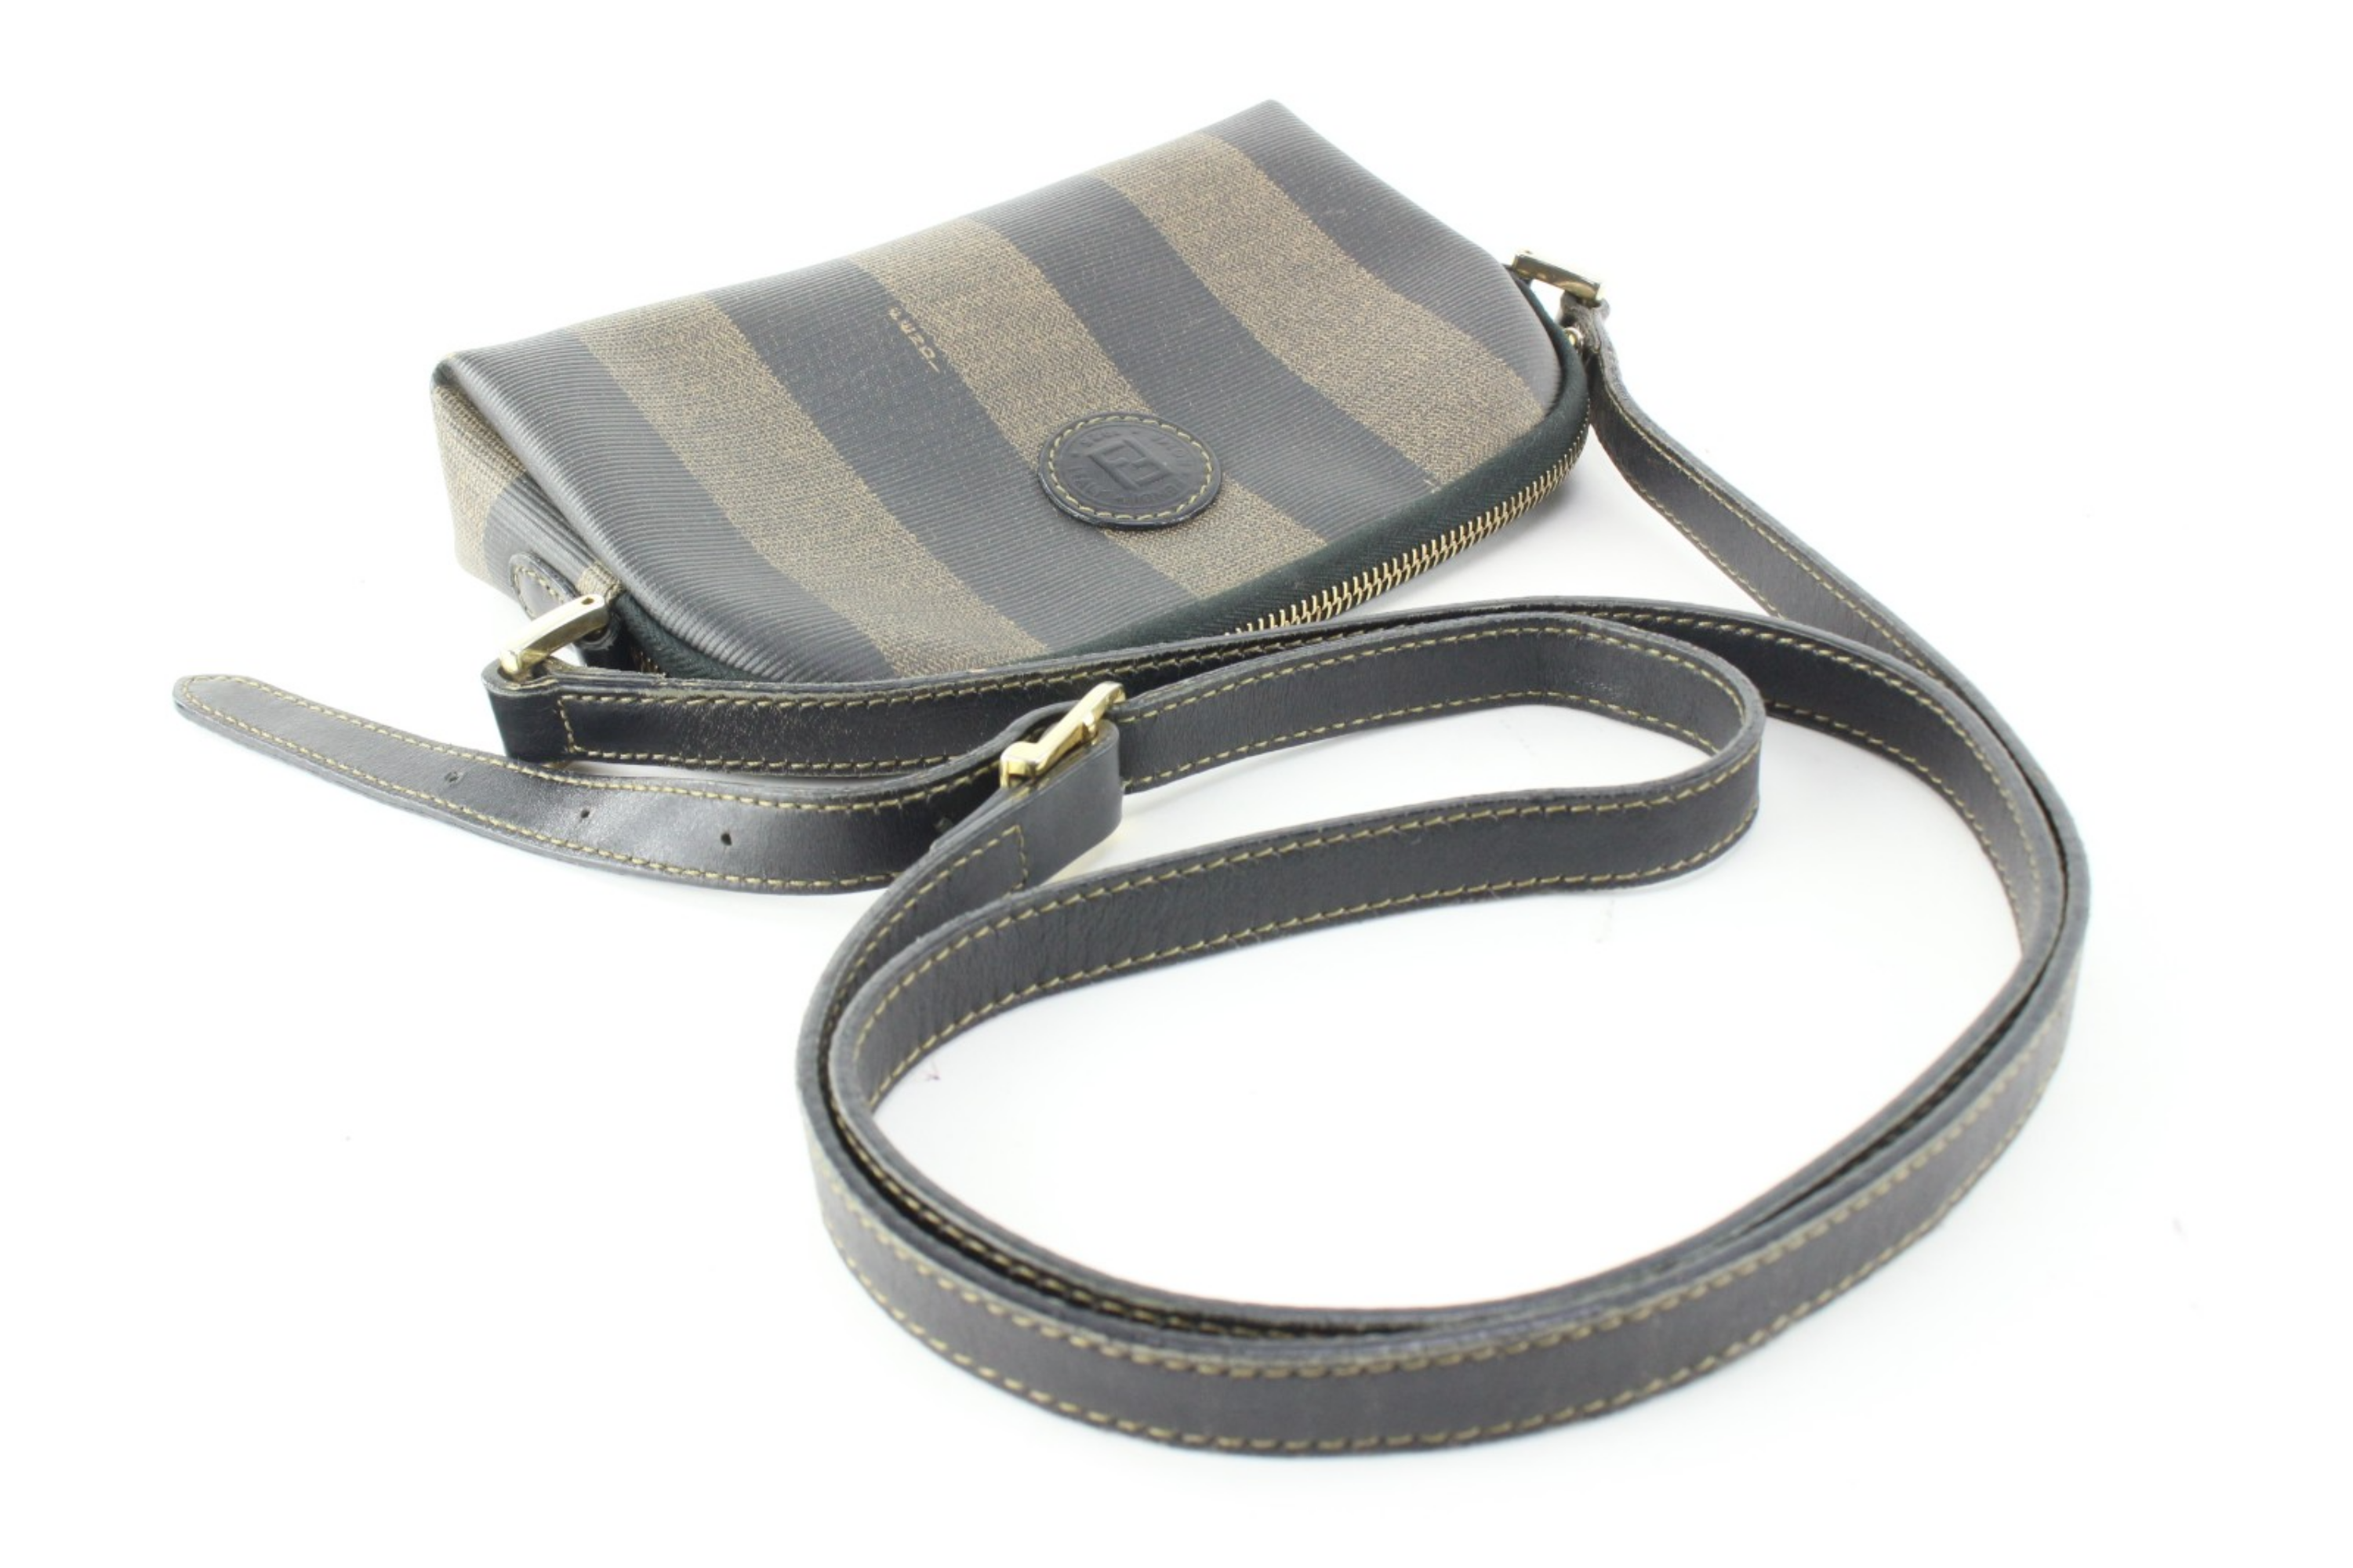 Vintage Striped Crossbody Bag